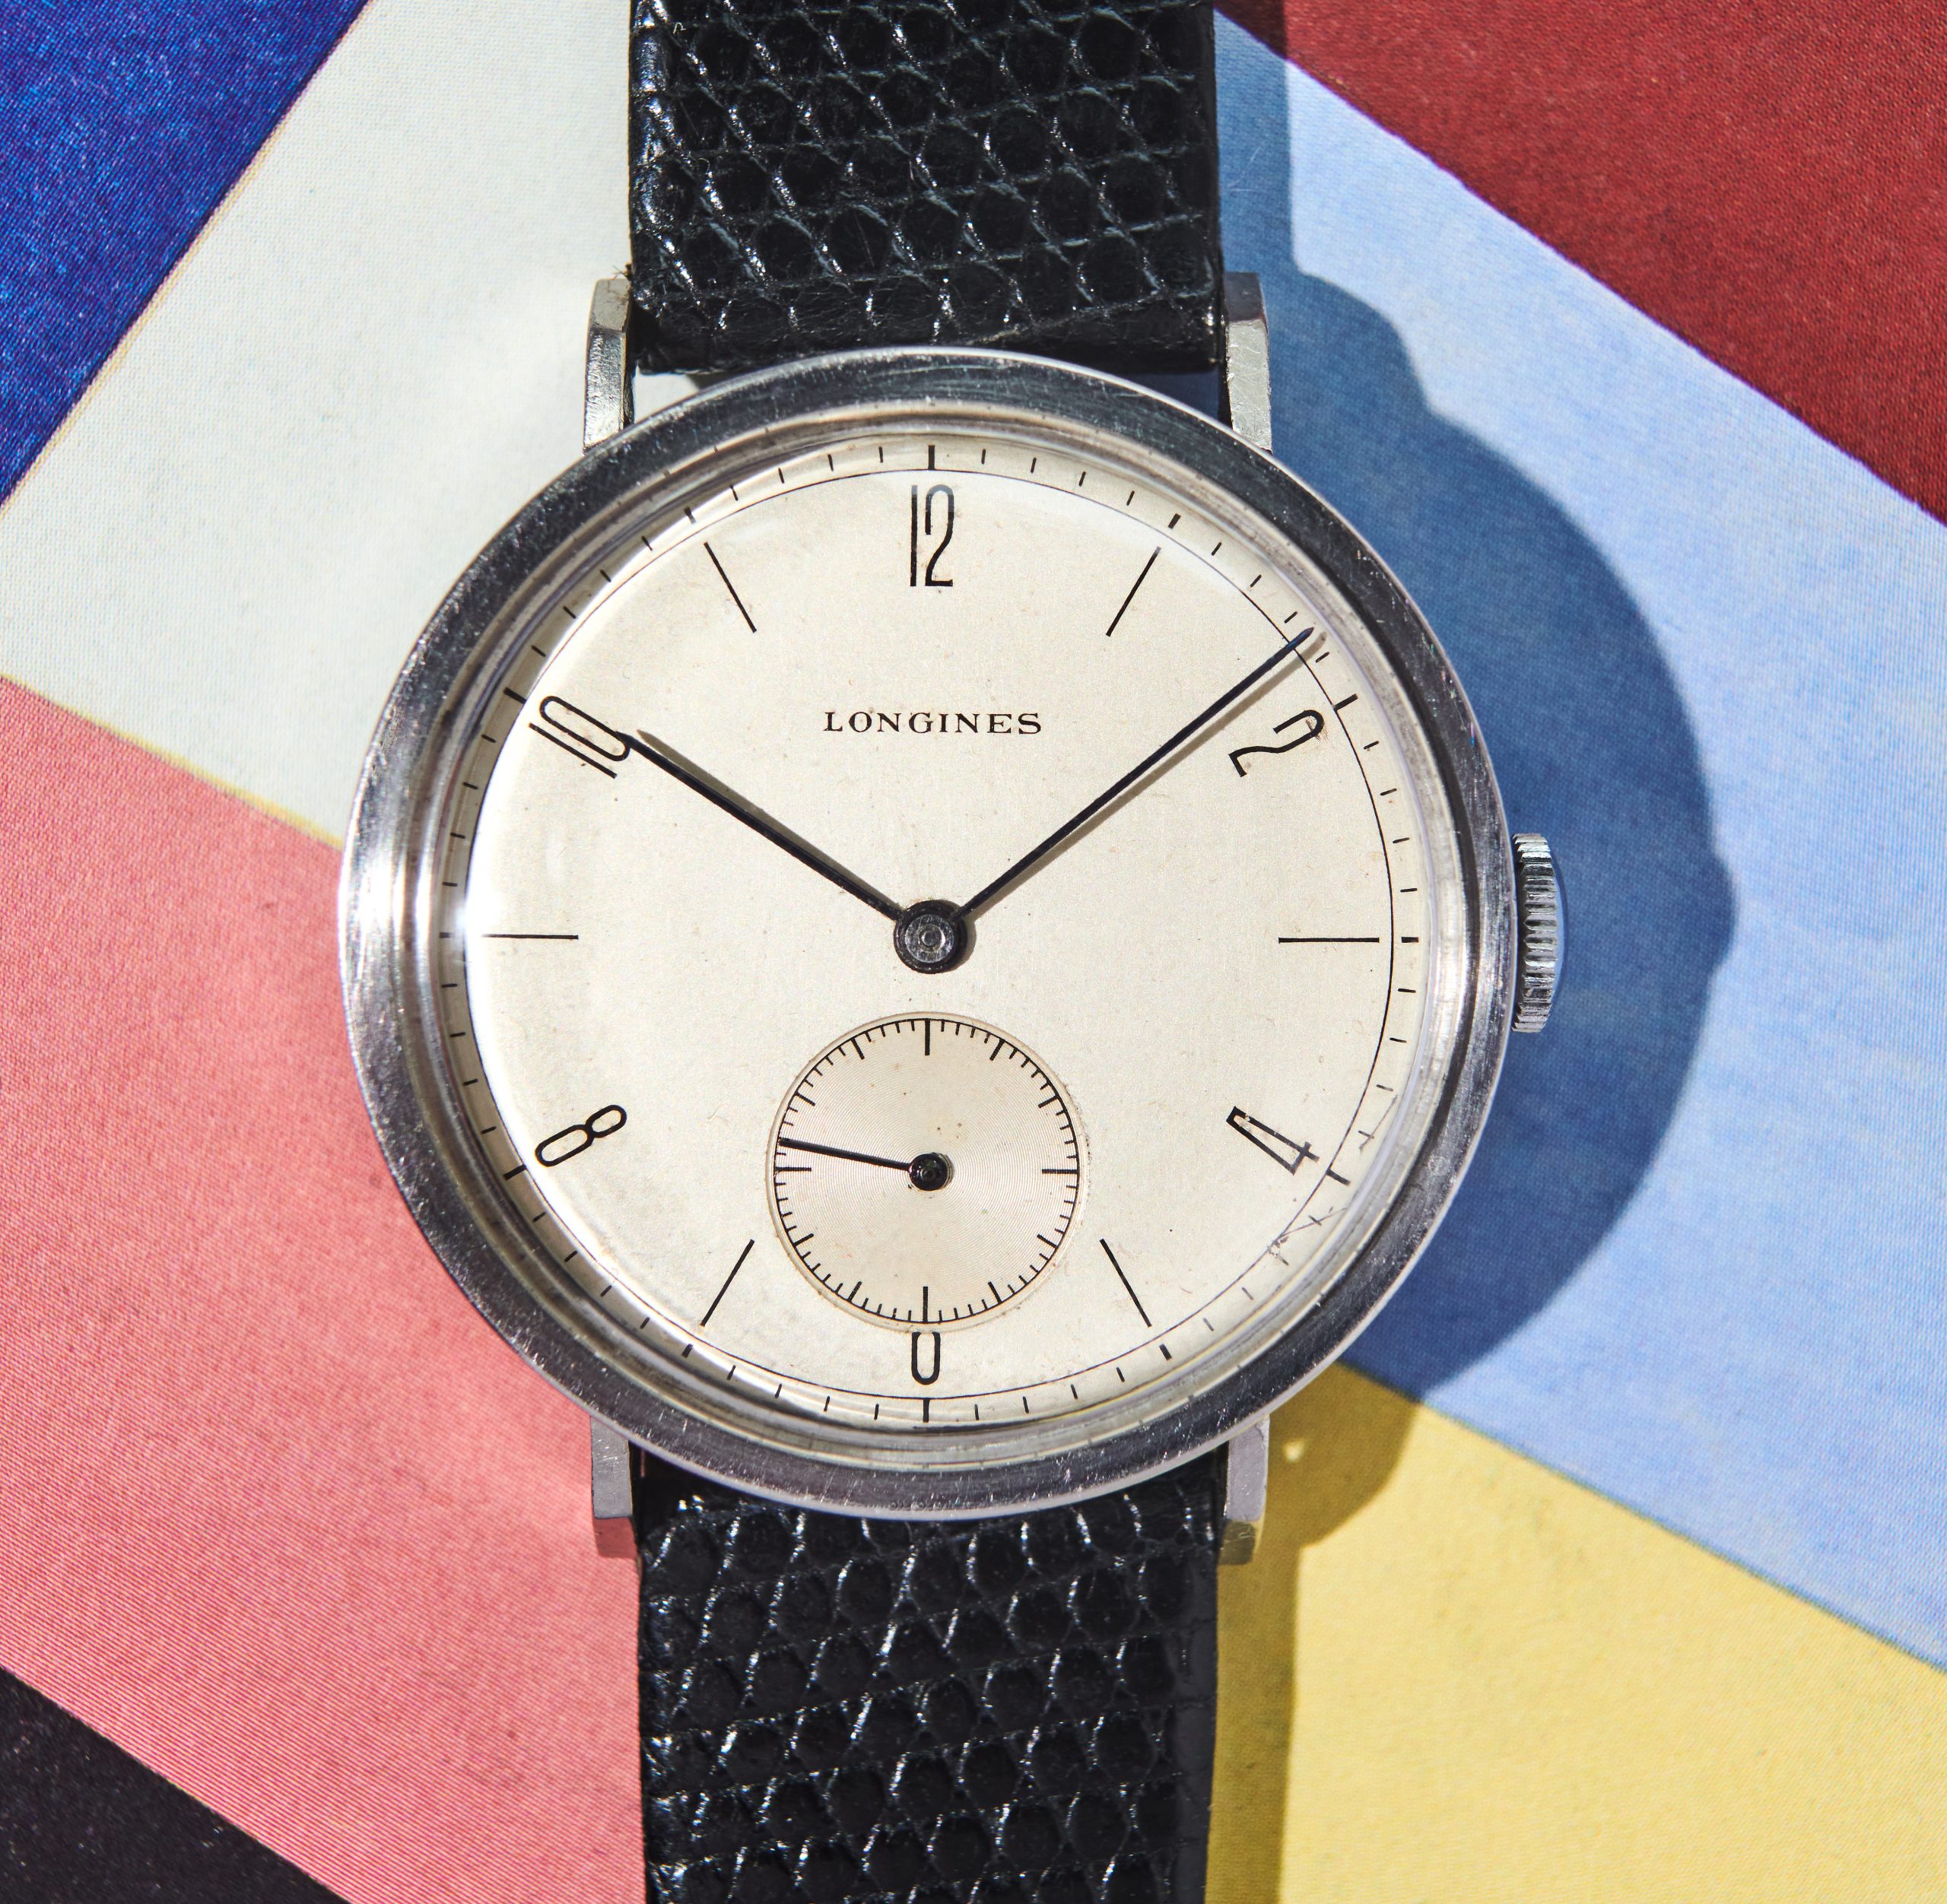 Longines Bauhaus watch